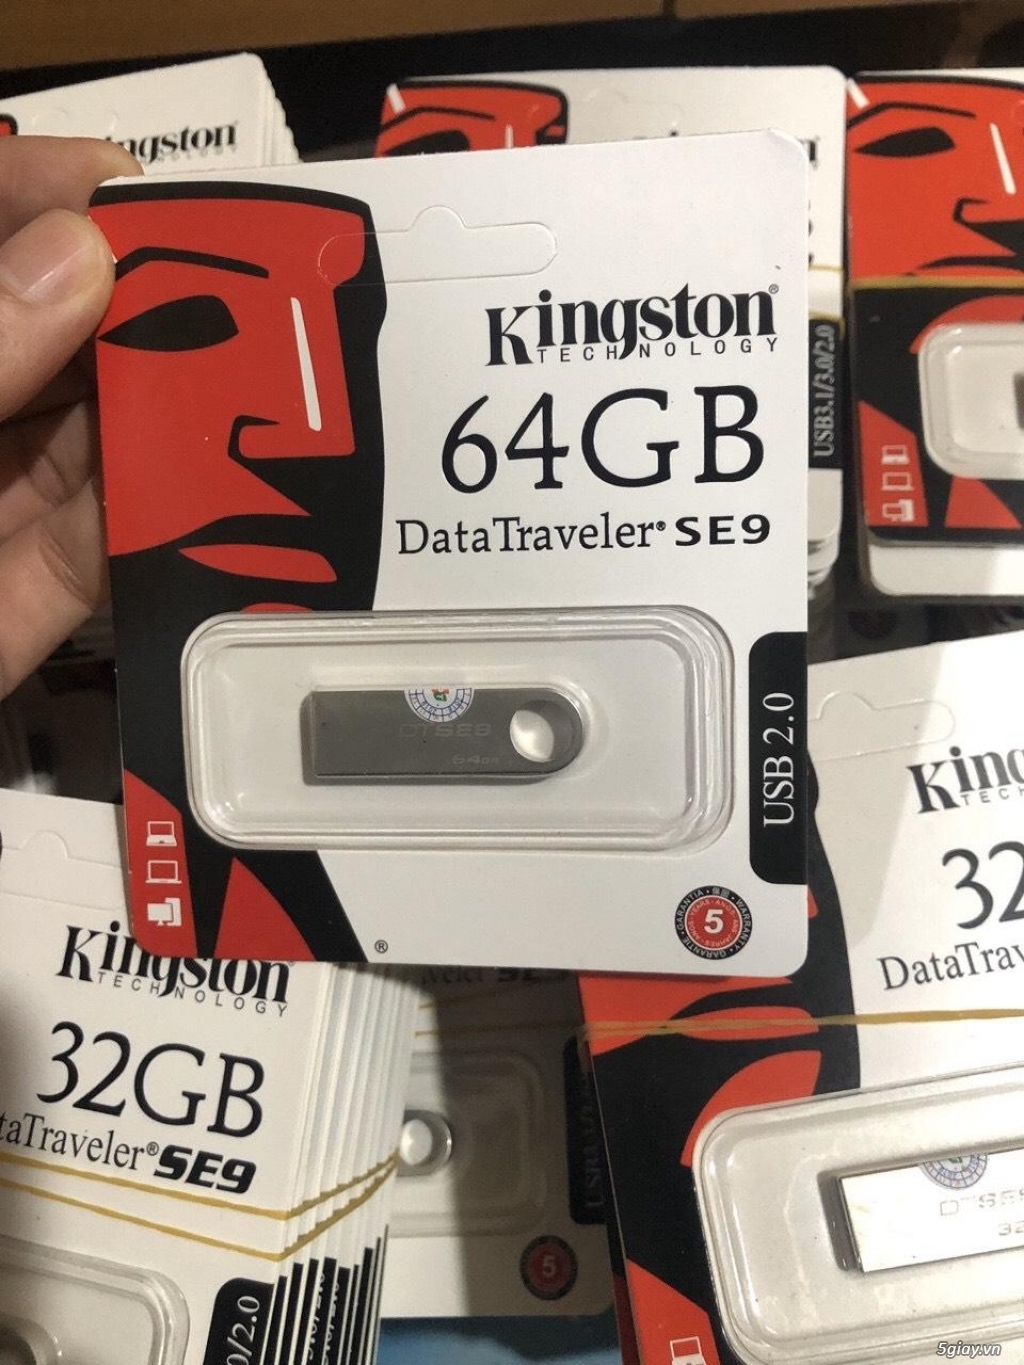 USB Kingston 4G,8G,16G,32G,64G,128G DTSe9 BH 2N (MUA 20 TẶNG 01) - 2